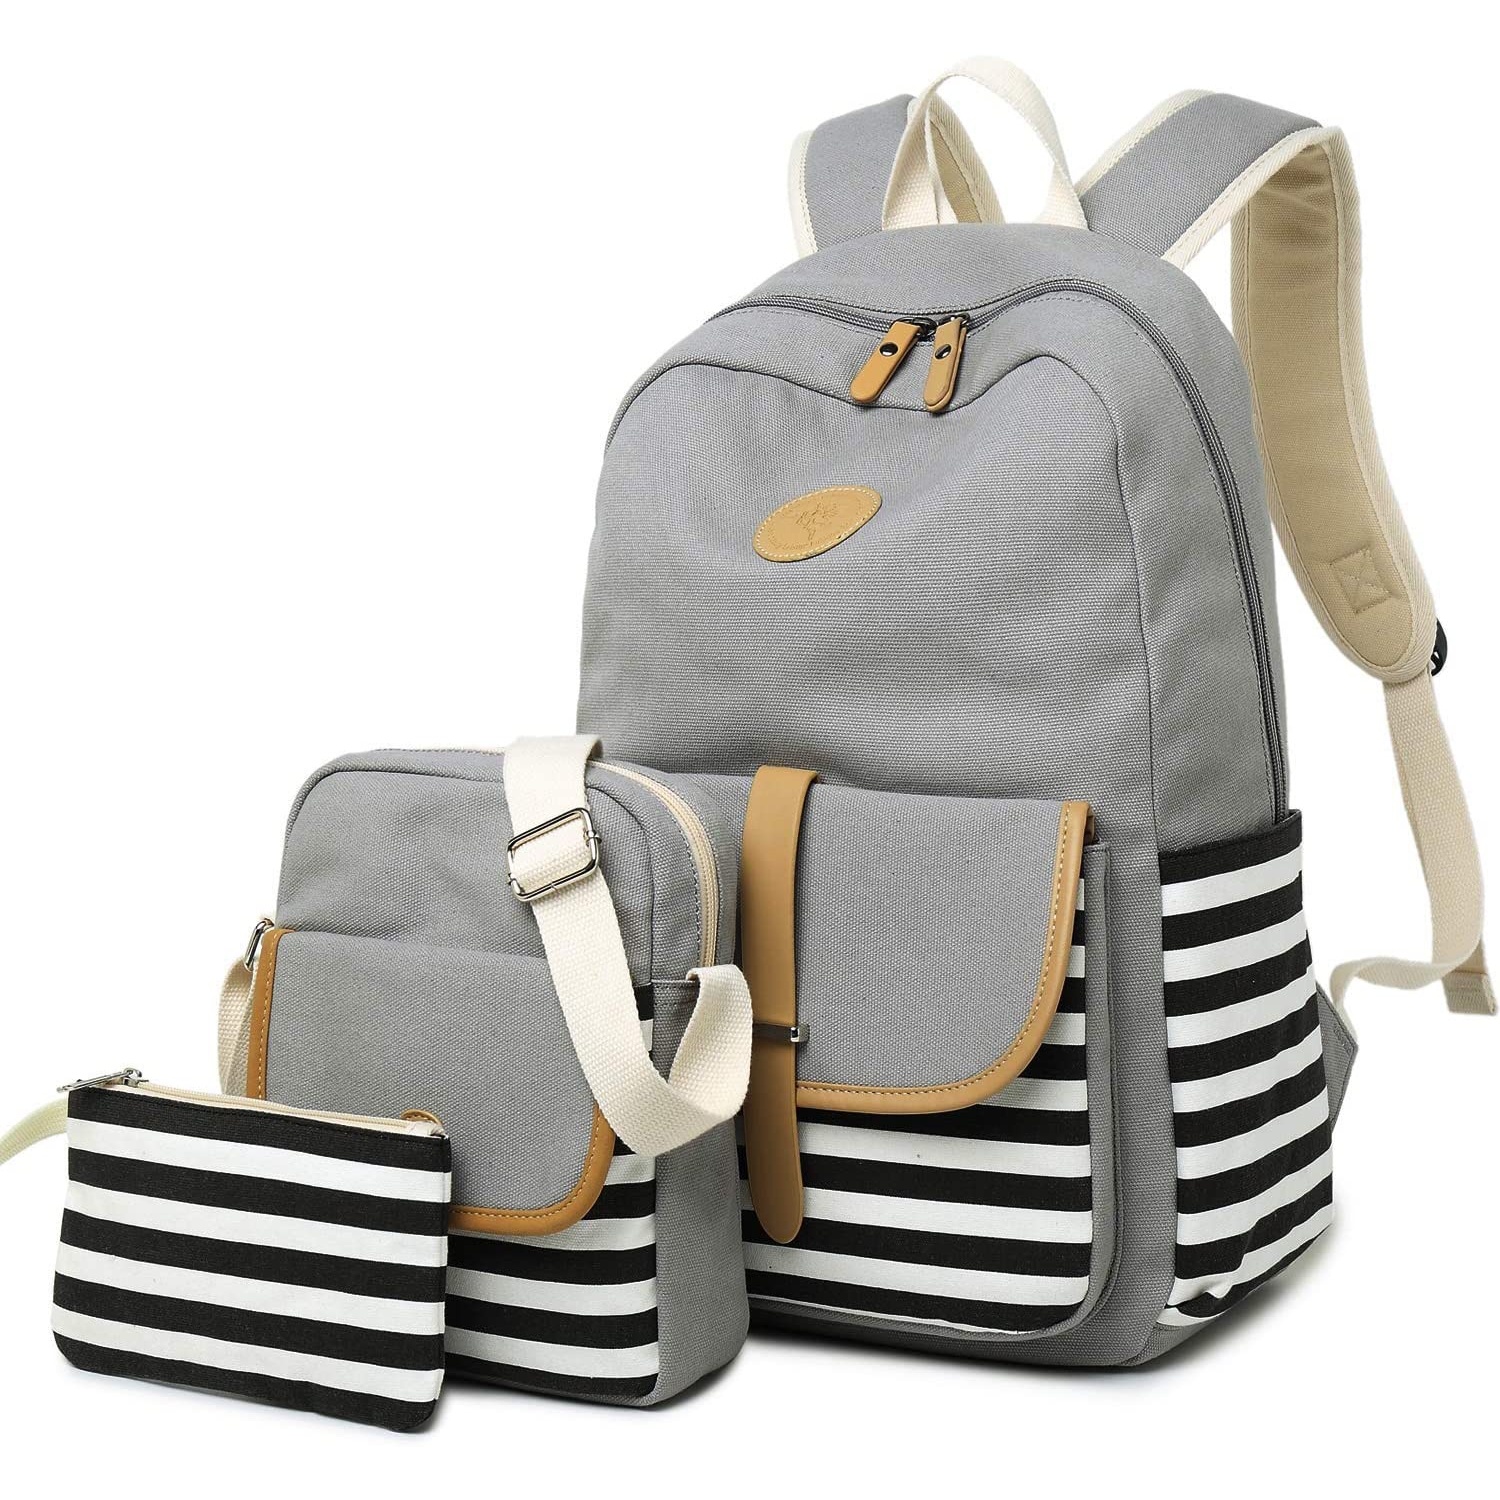 Backpack for Teen Girl, Lightweight Bookpack for School, 15 Inch Laptop Bag, Travel Casual Daypack Kids Backpacks (A)